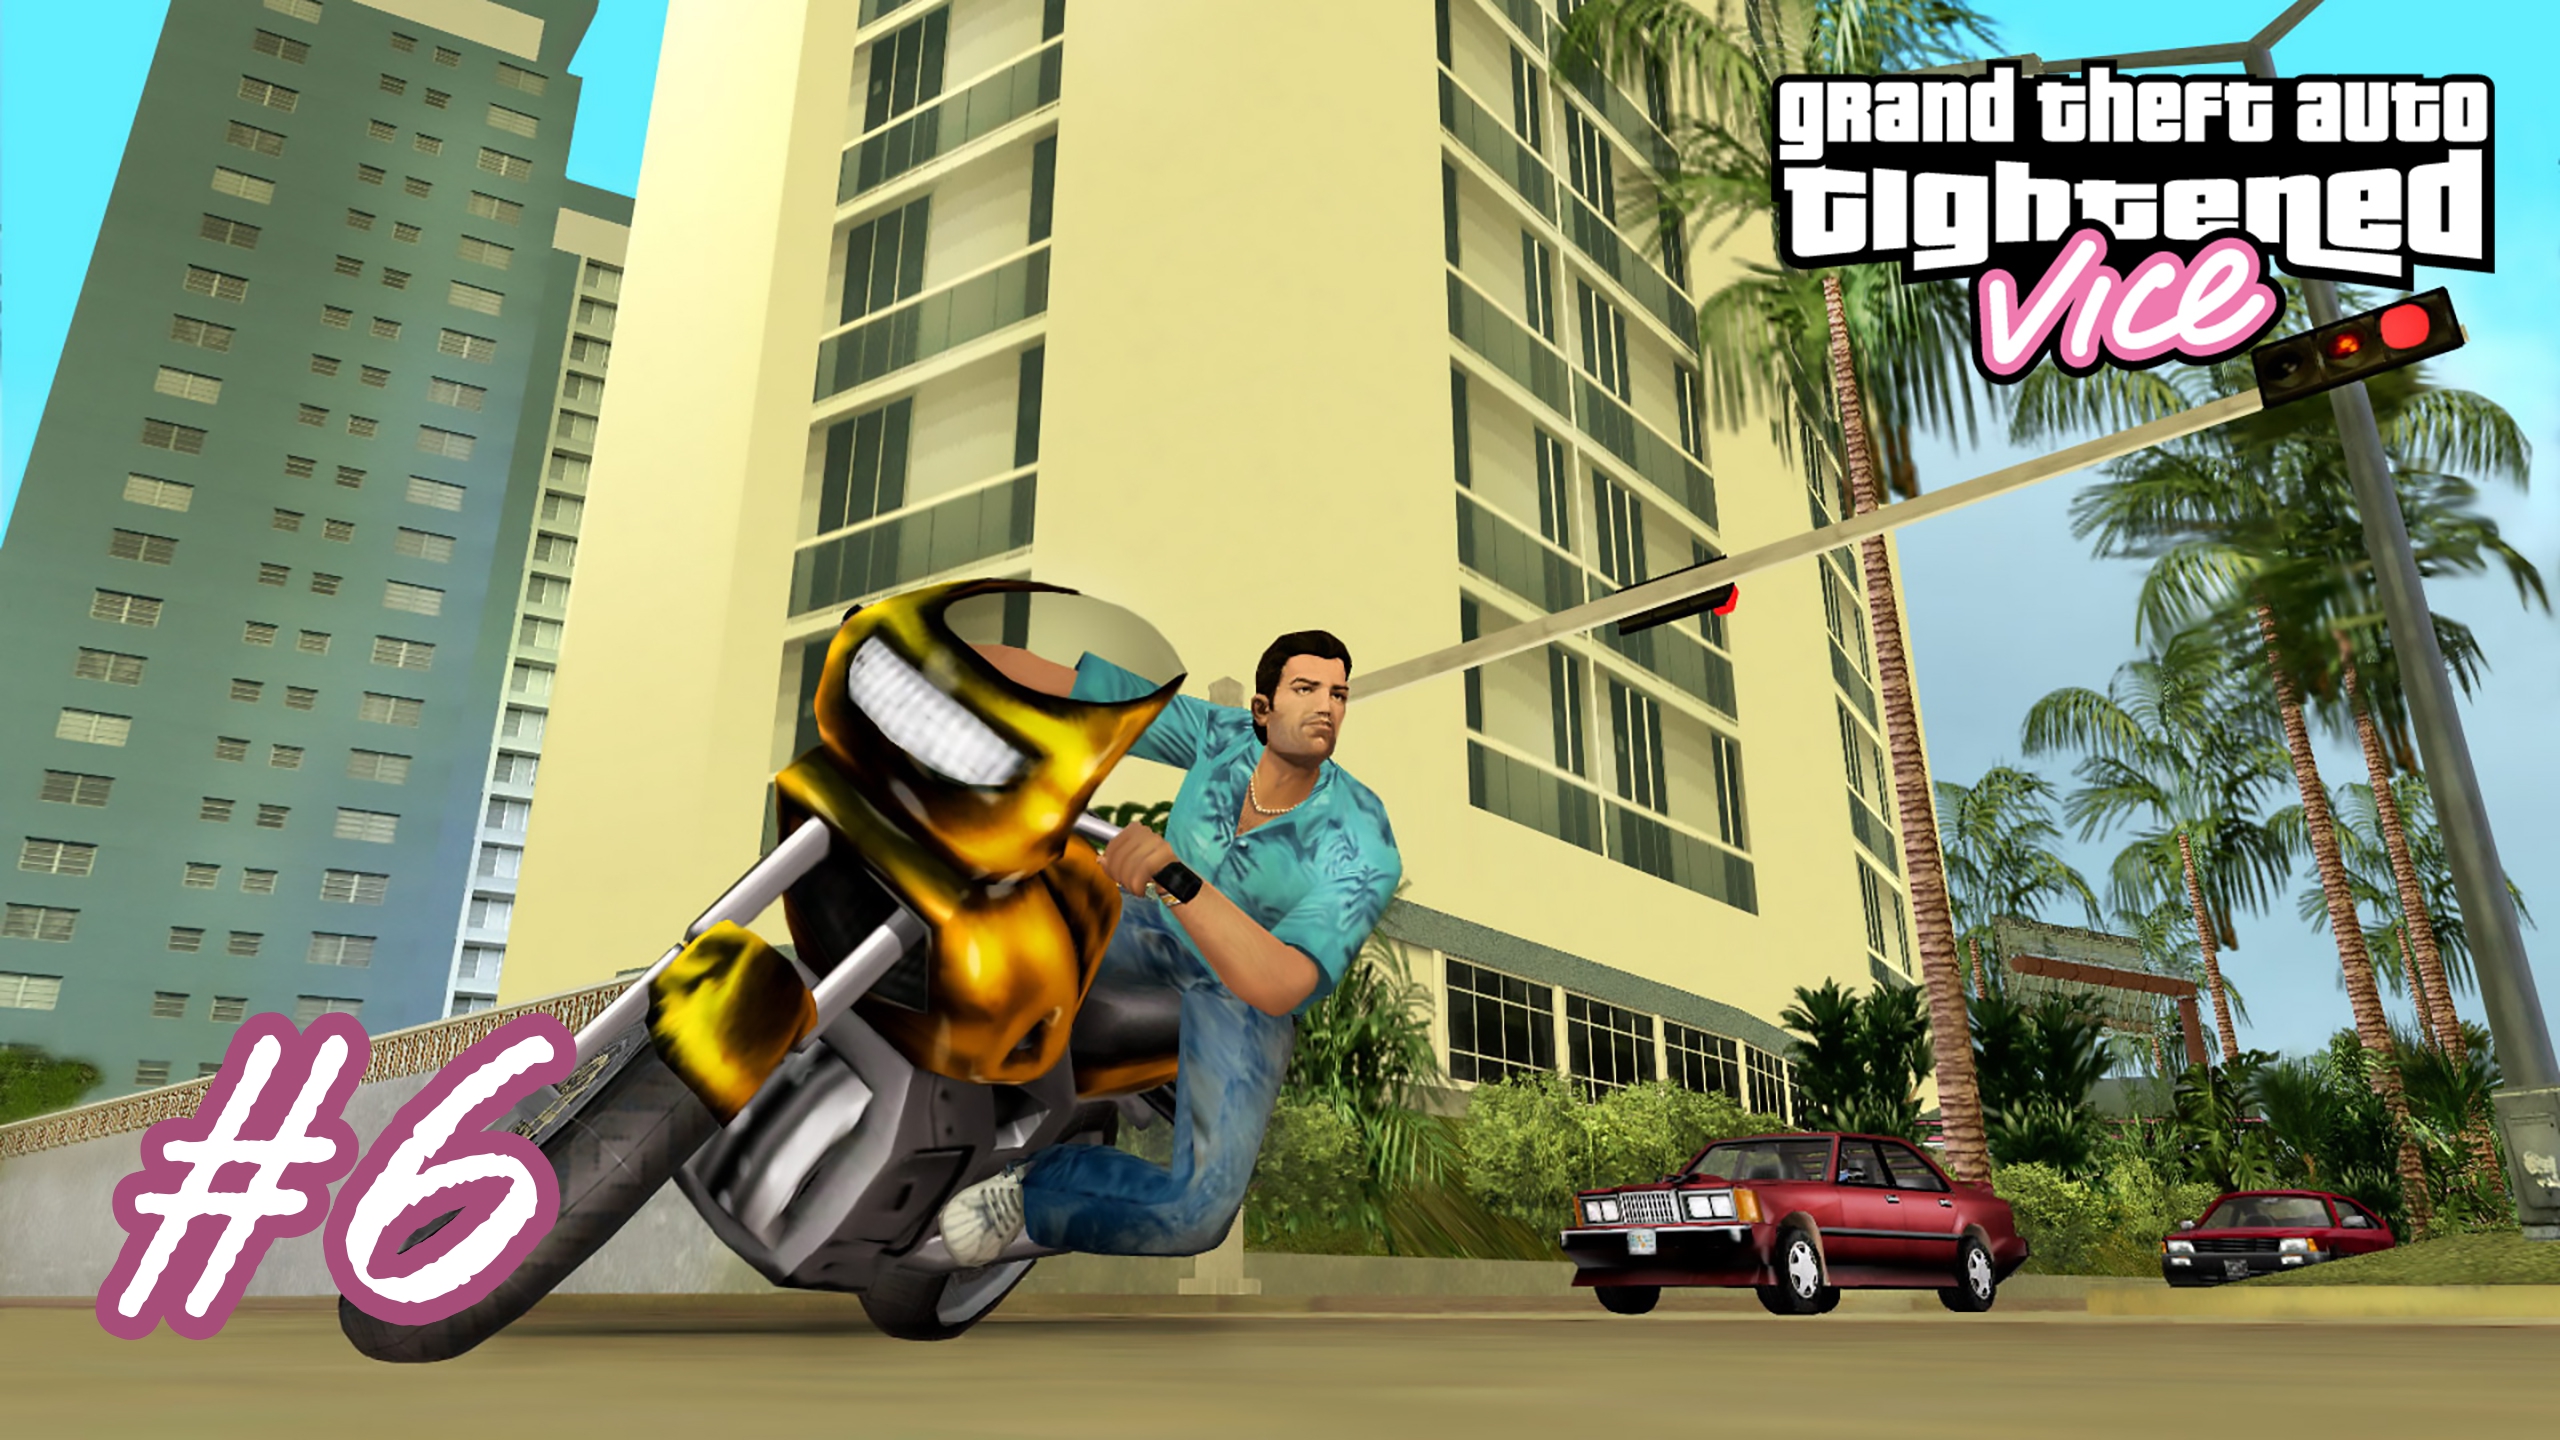 Grand Theft Auto VС: Tightened Vice - Высокое Напряжение #6 (100%)